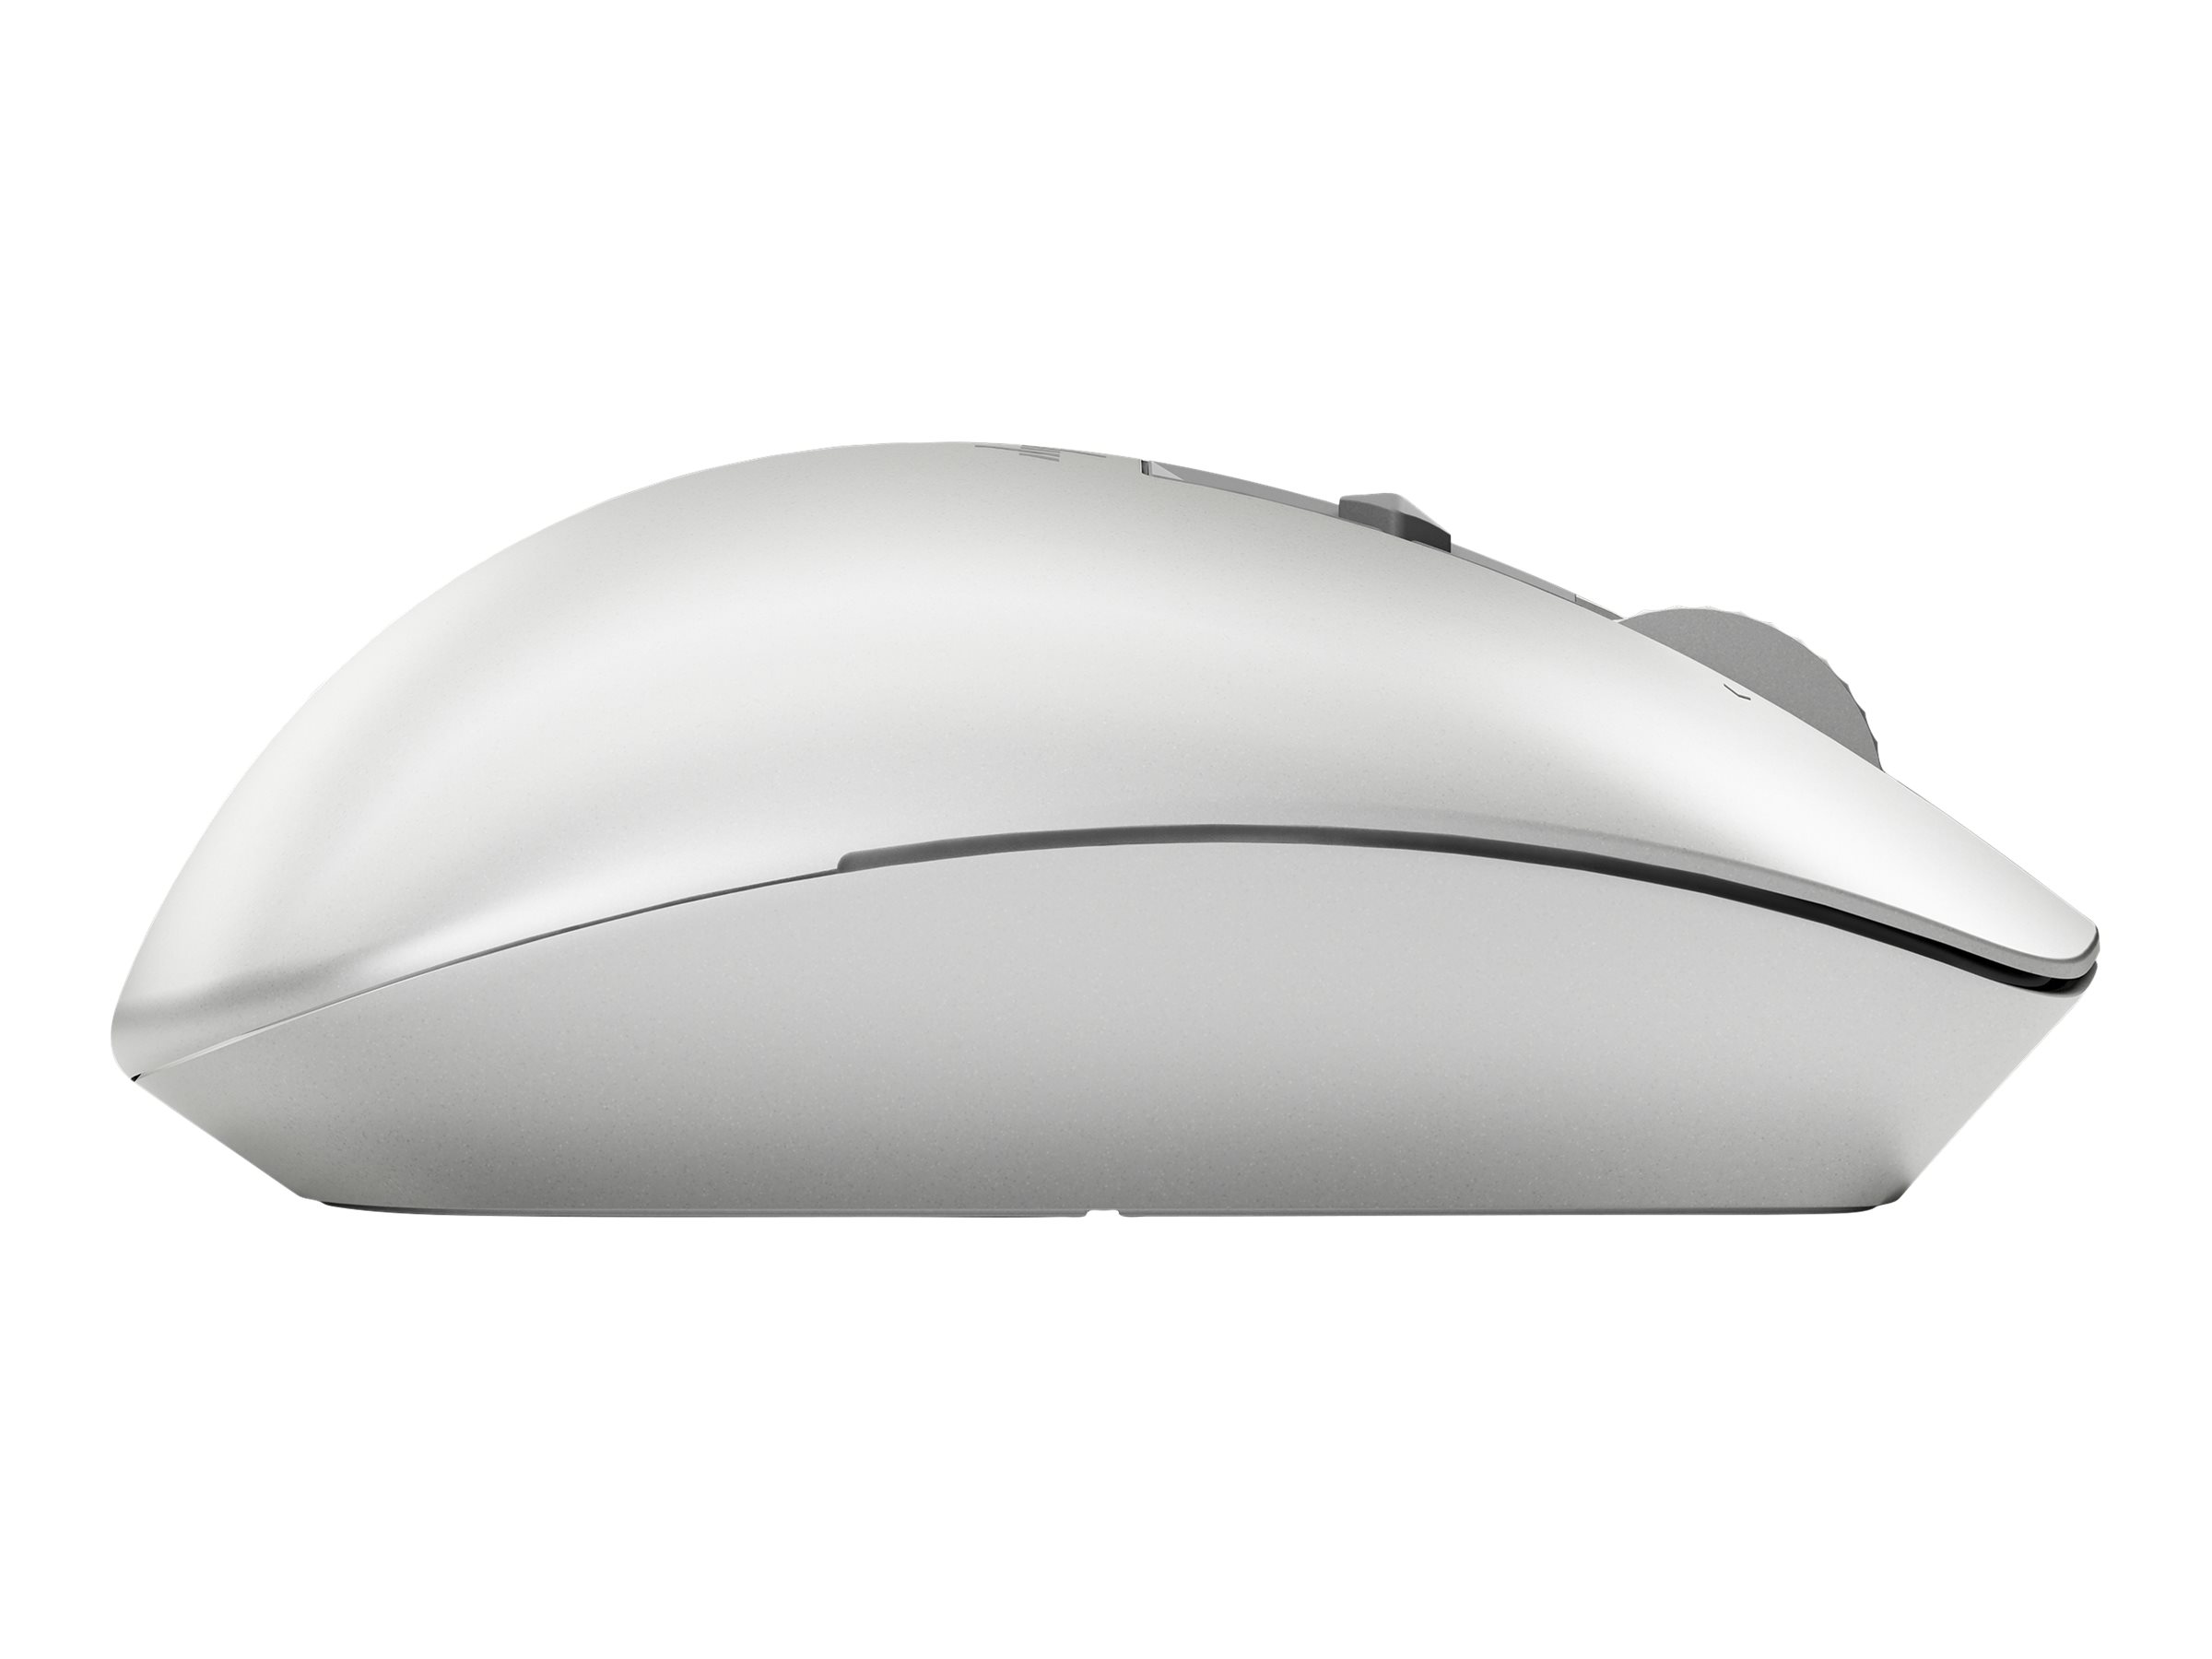 HP Wireless Creator 930M Mouse EURO (P)